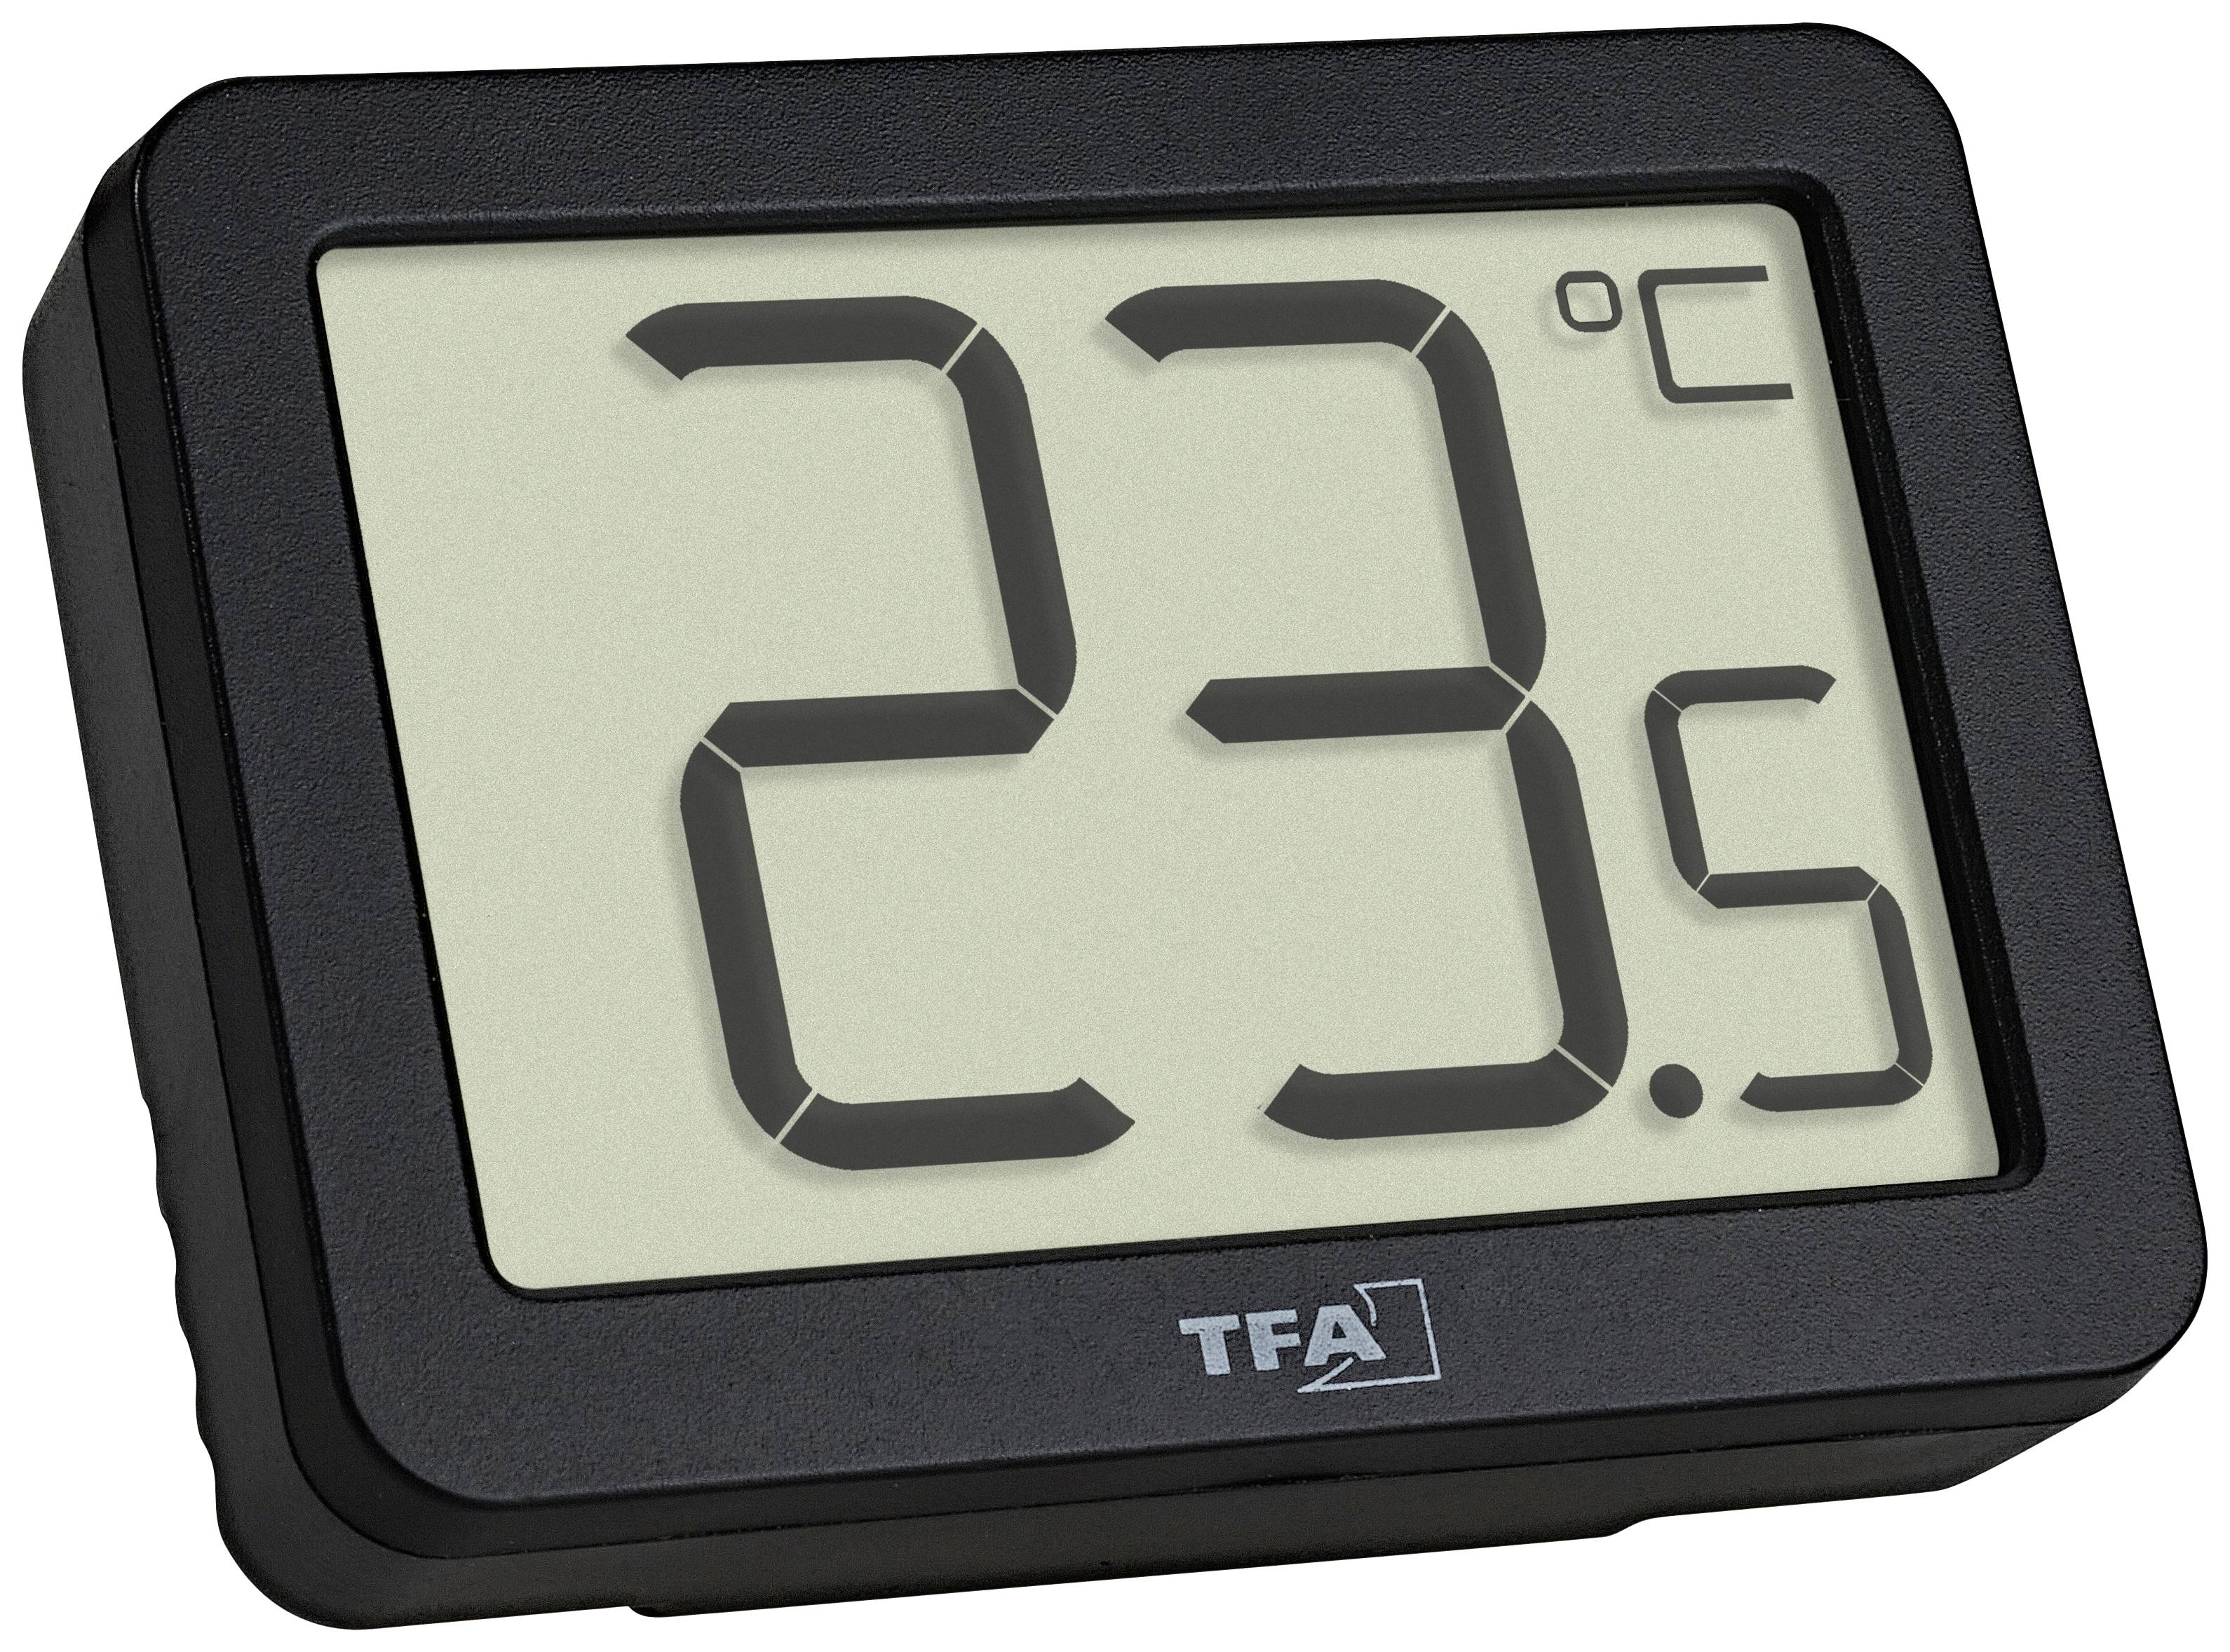 lijden Clip vlinder Intensief TFA Dostmann Digitales Thermometer Thermometer Zwart kopen ? Conrad  Electronic